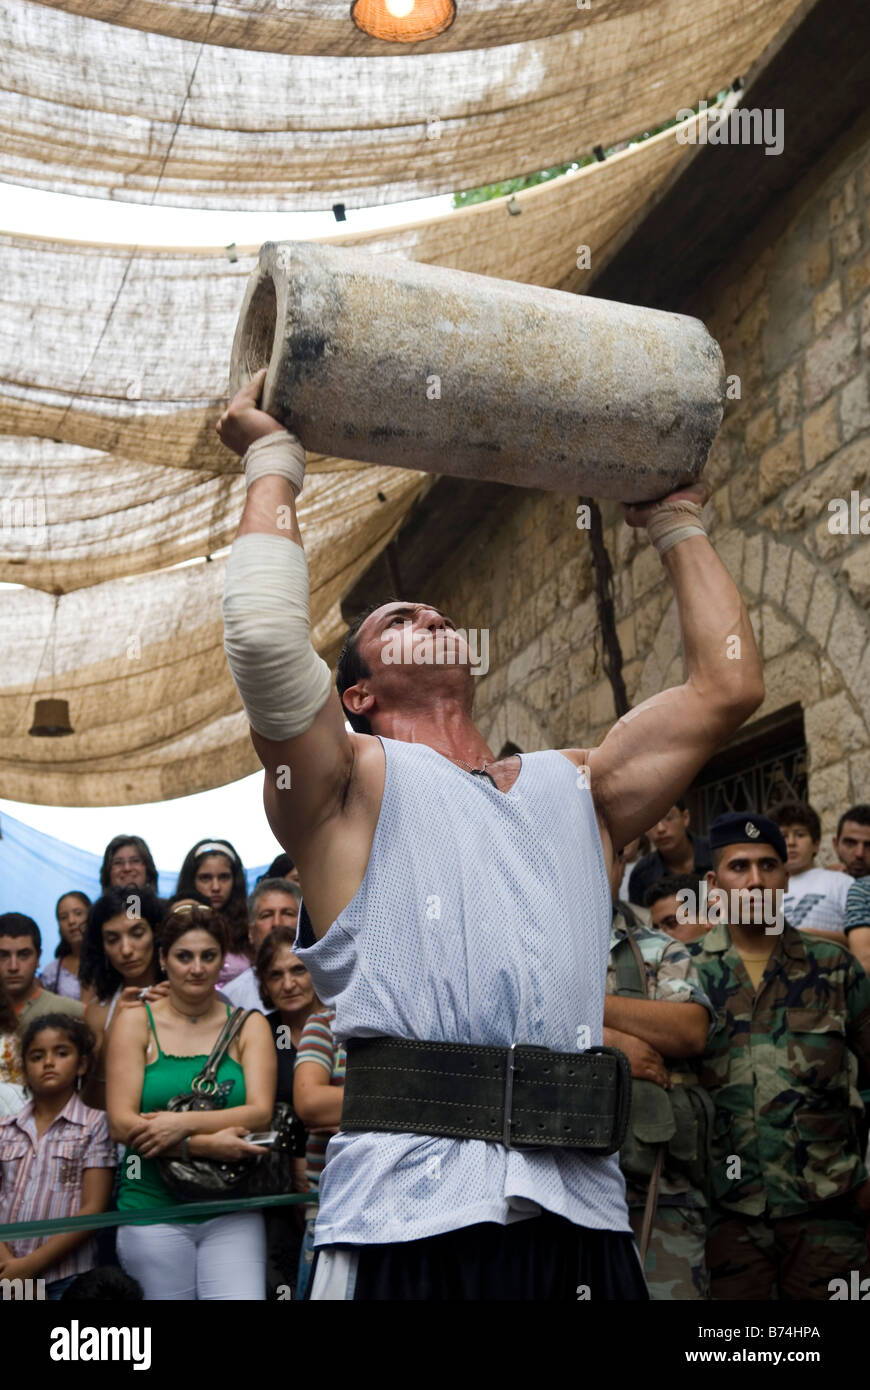 Strong man lifting lourde pierre Liban Moyen Orient Banque D'Images